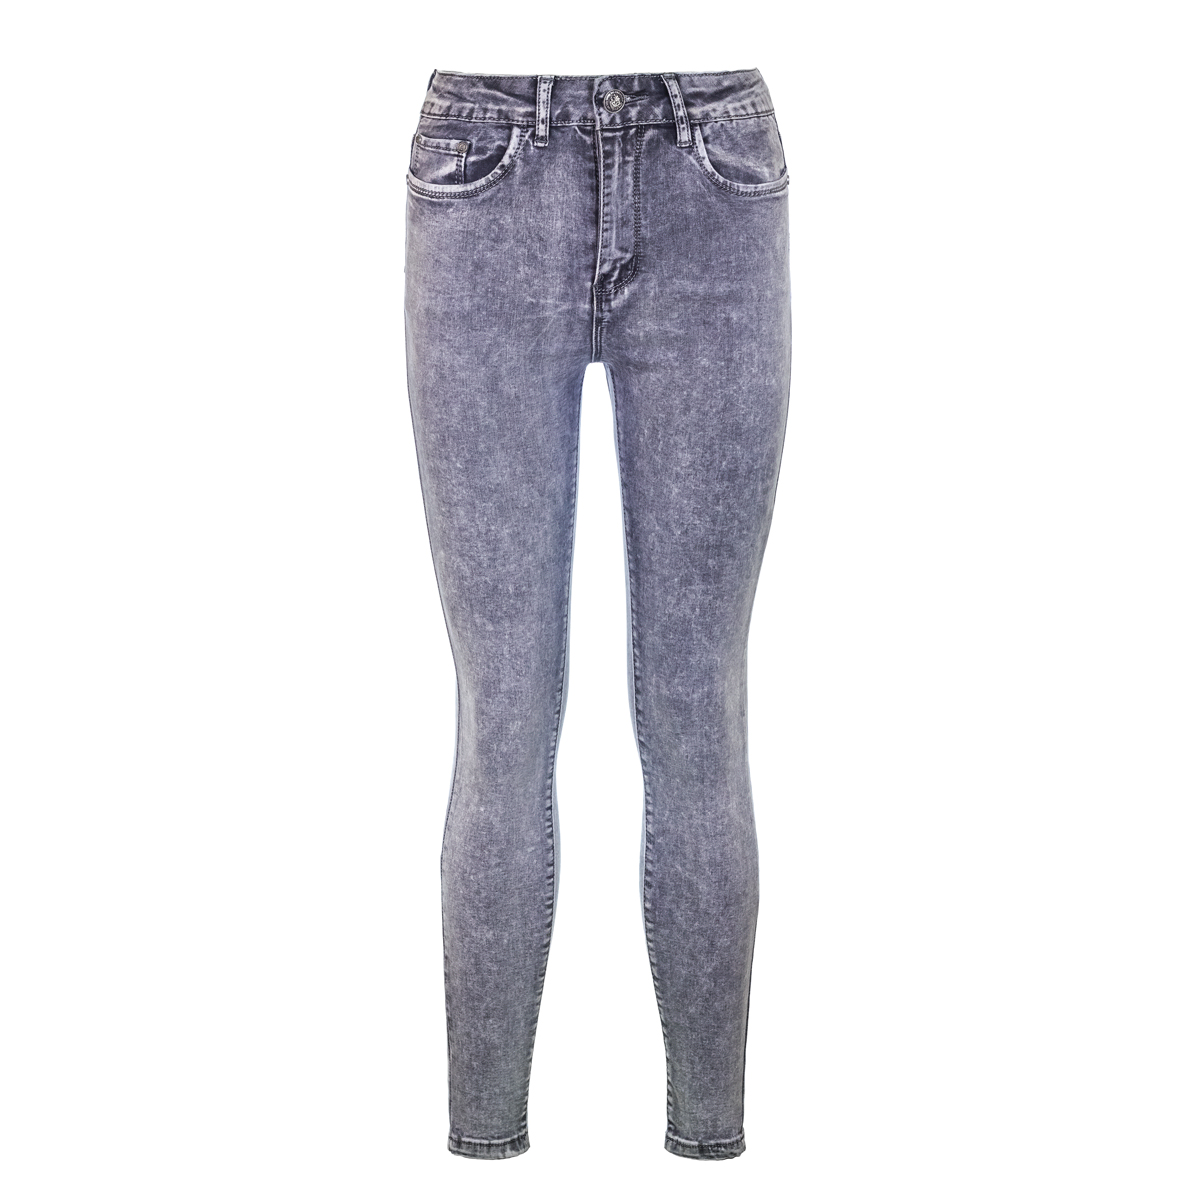 Жен. джинсы арт. 12-0087 Серый р. 30 -, размер 30 - фото 2